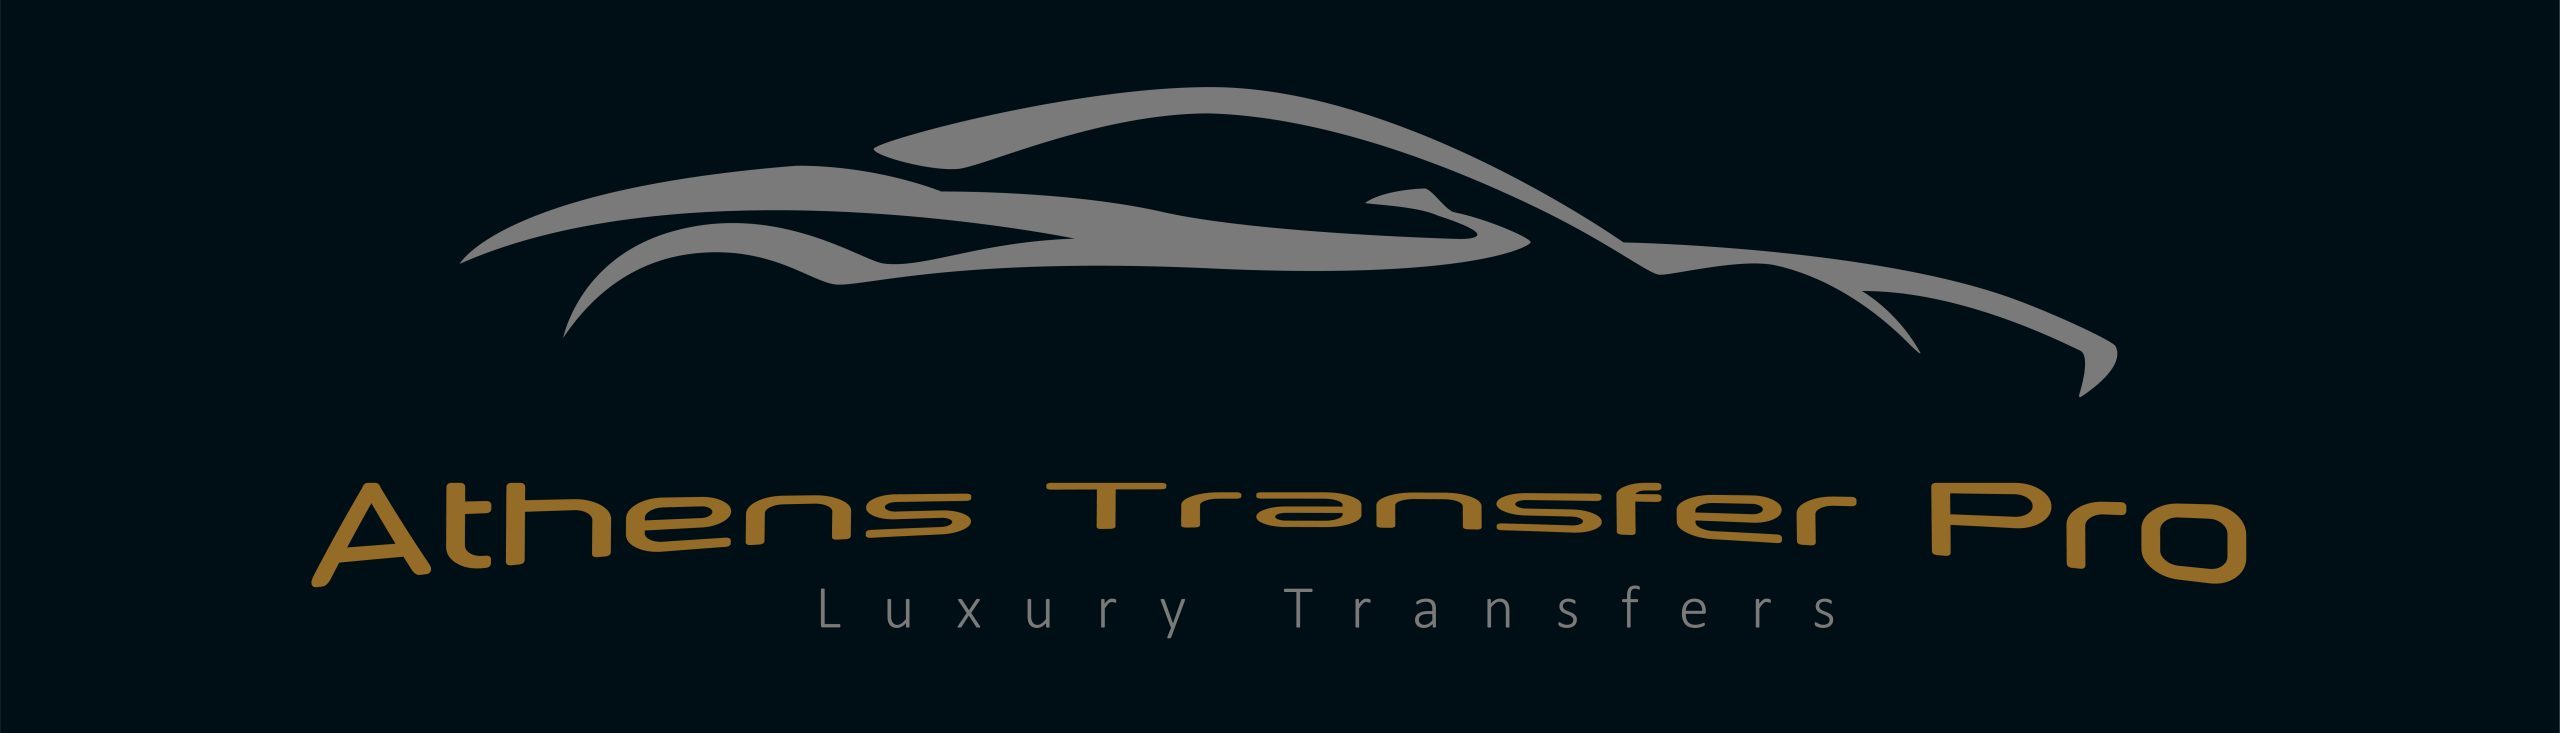 Athens Transfer Pro logo